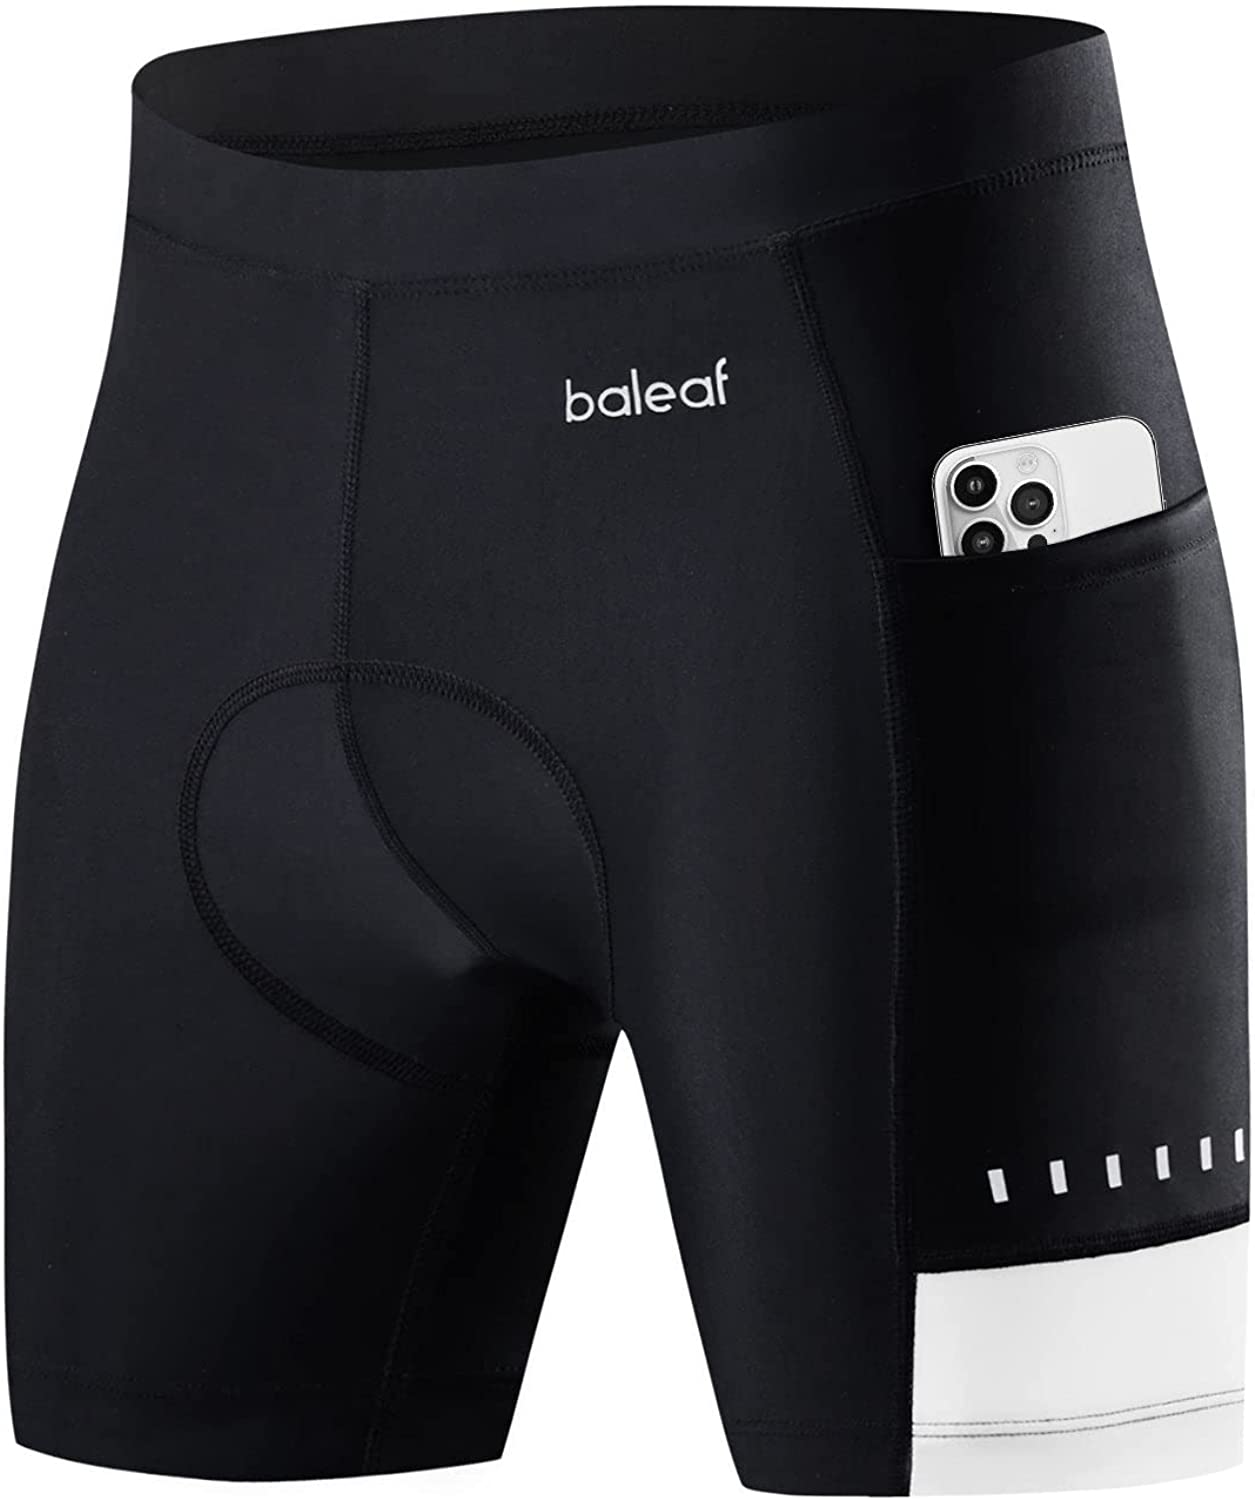  BALEAF Men's Bike Shorts with 4D Padding Cycling